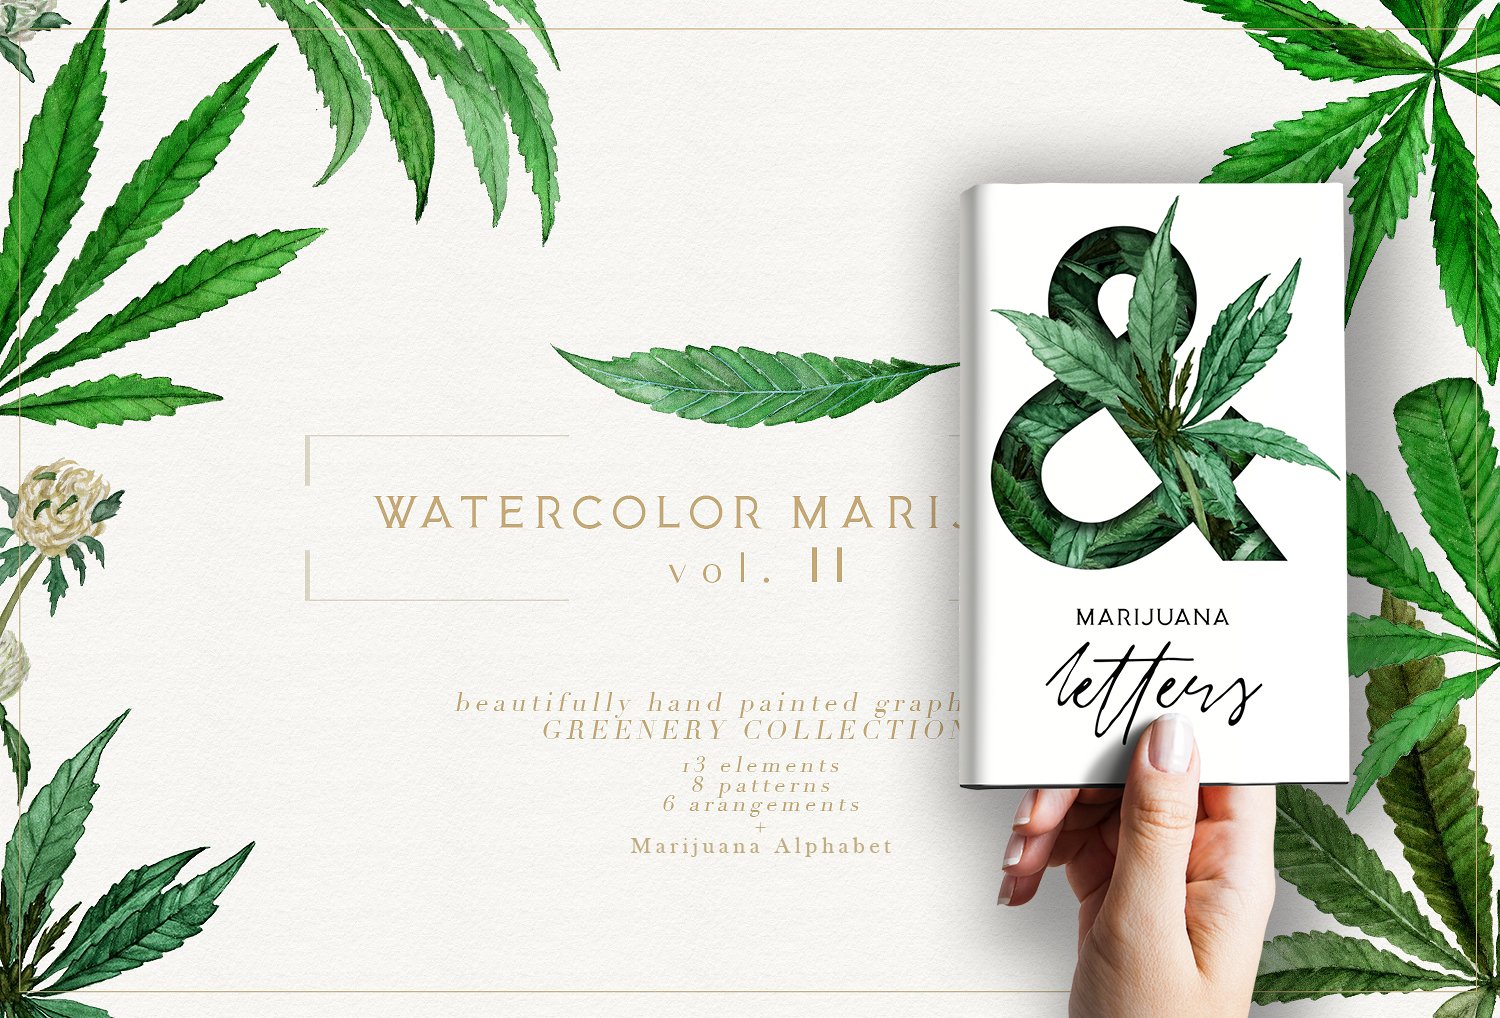 Watercolor Marijuana Vol.II cover image.